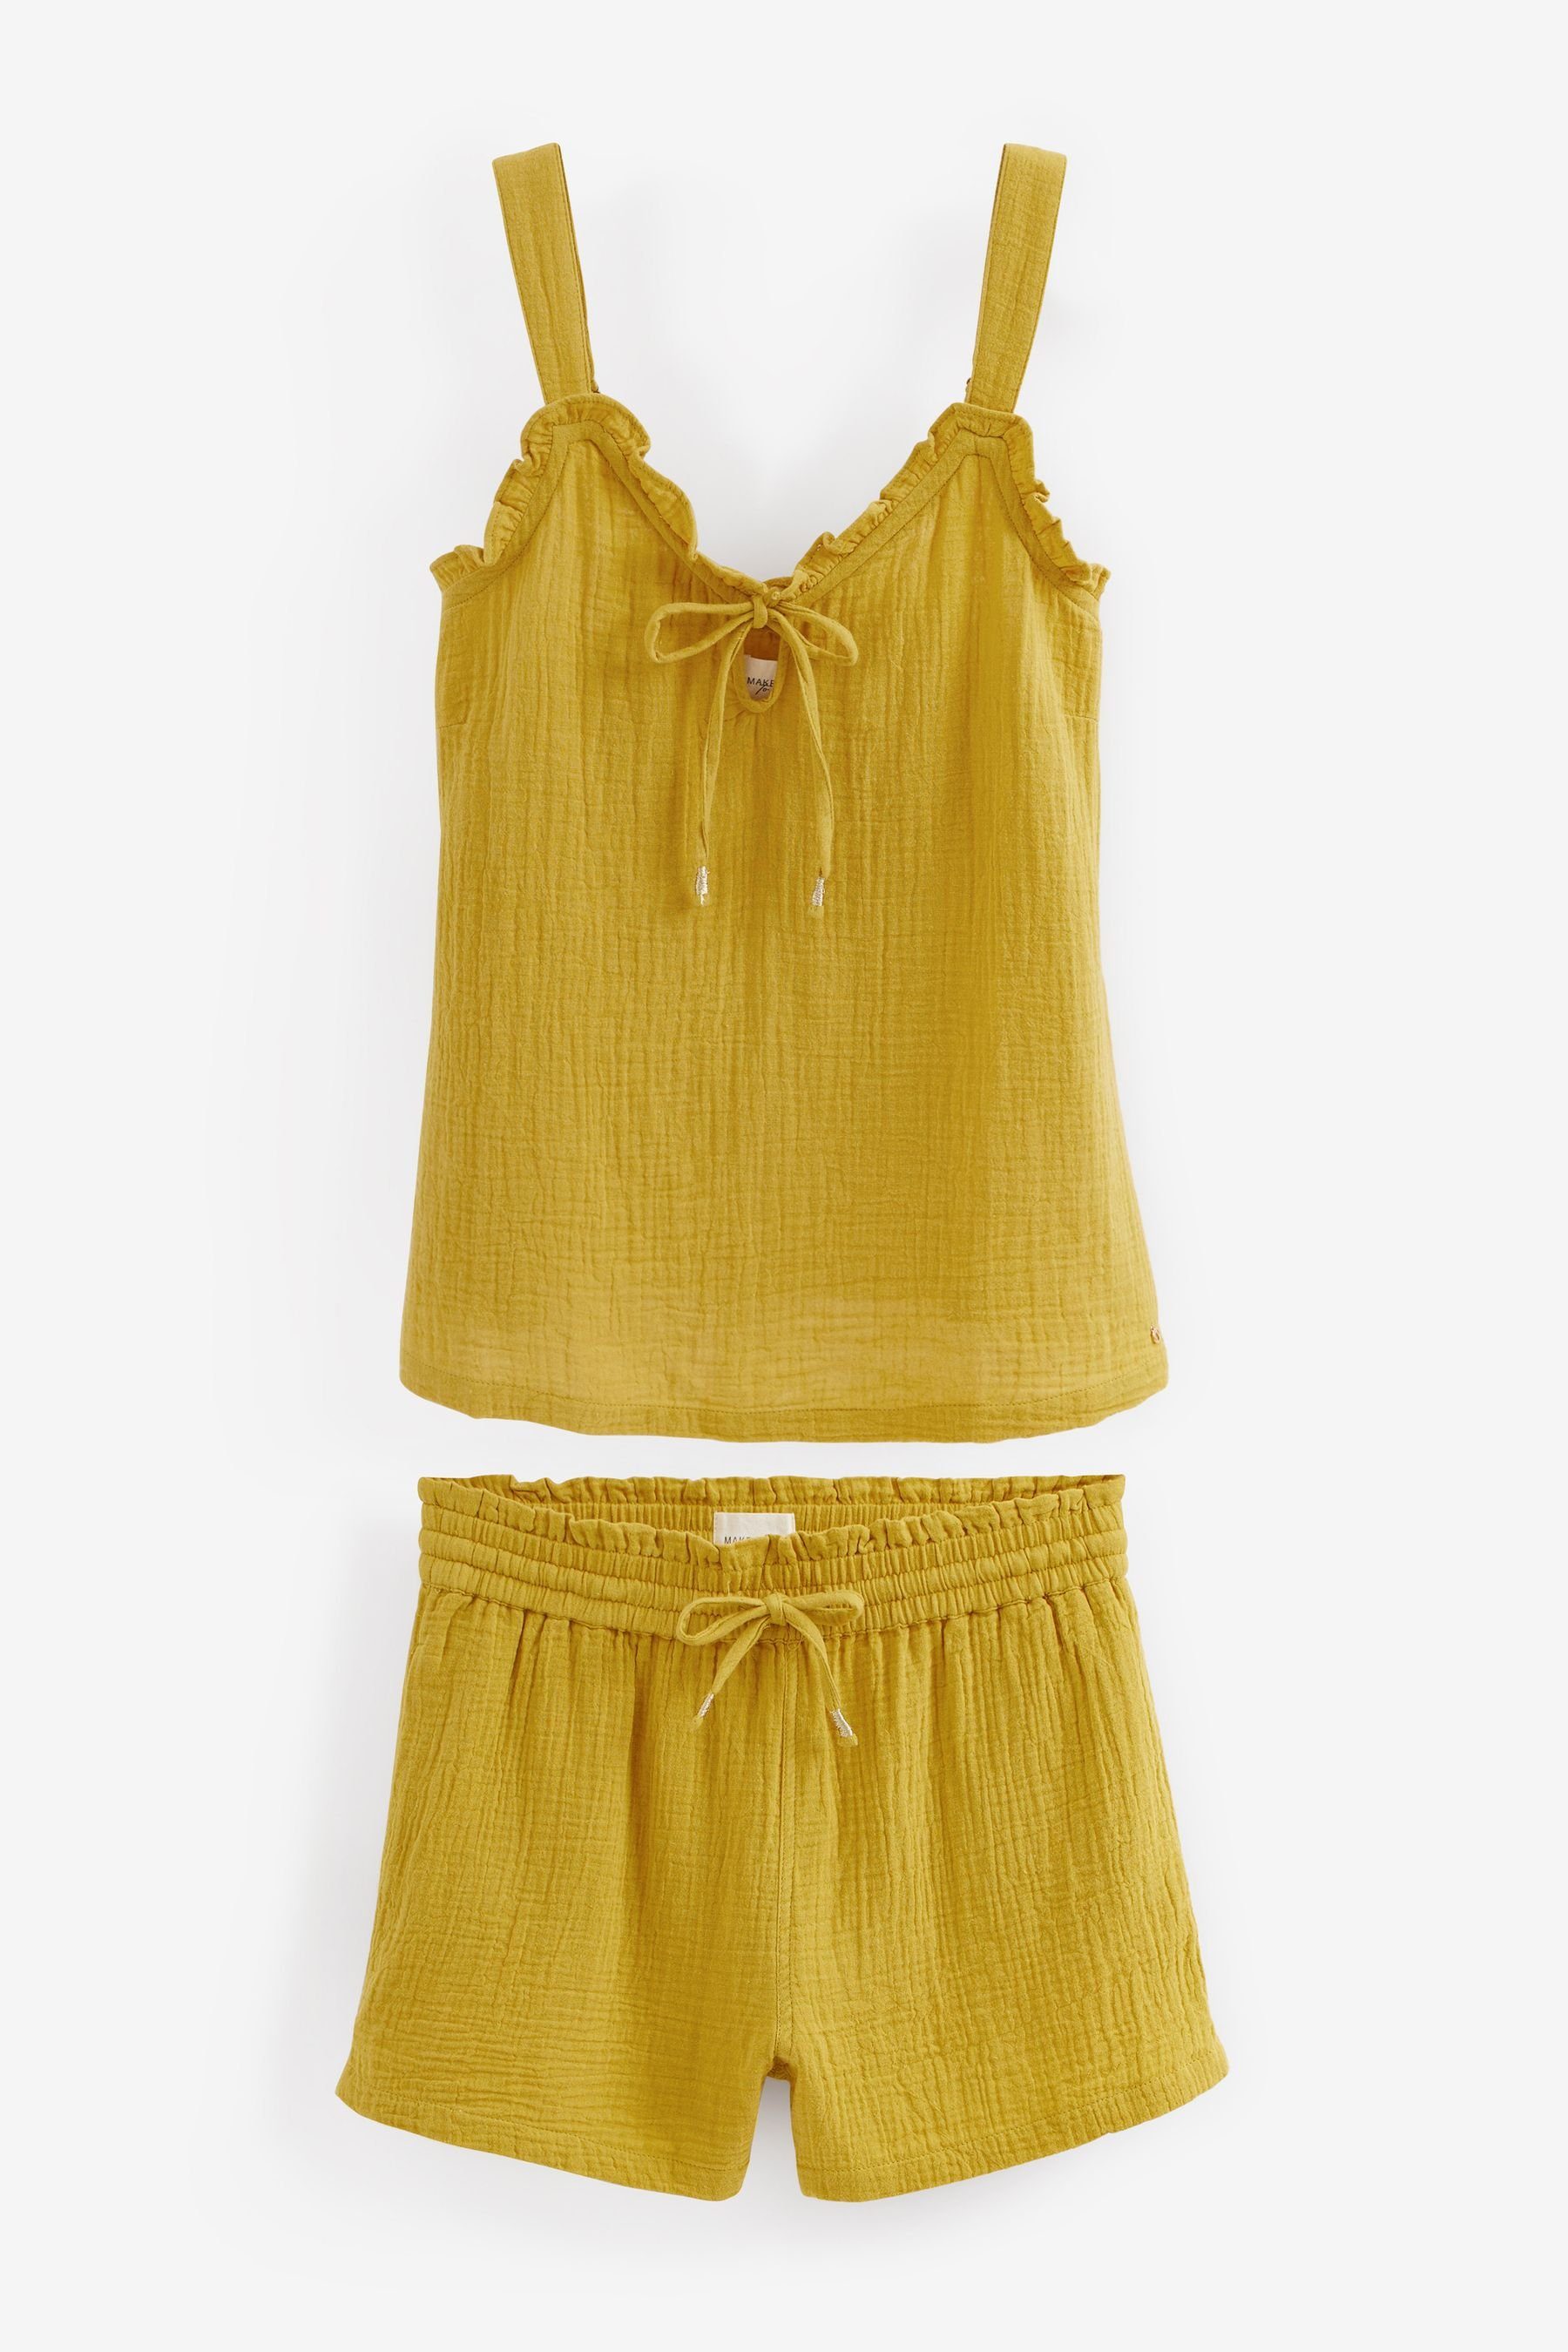 Next Pyjama Schlafanzug in Knitteroptik mit Trägertop + Shorts (2 tlg)